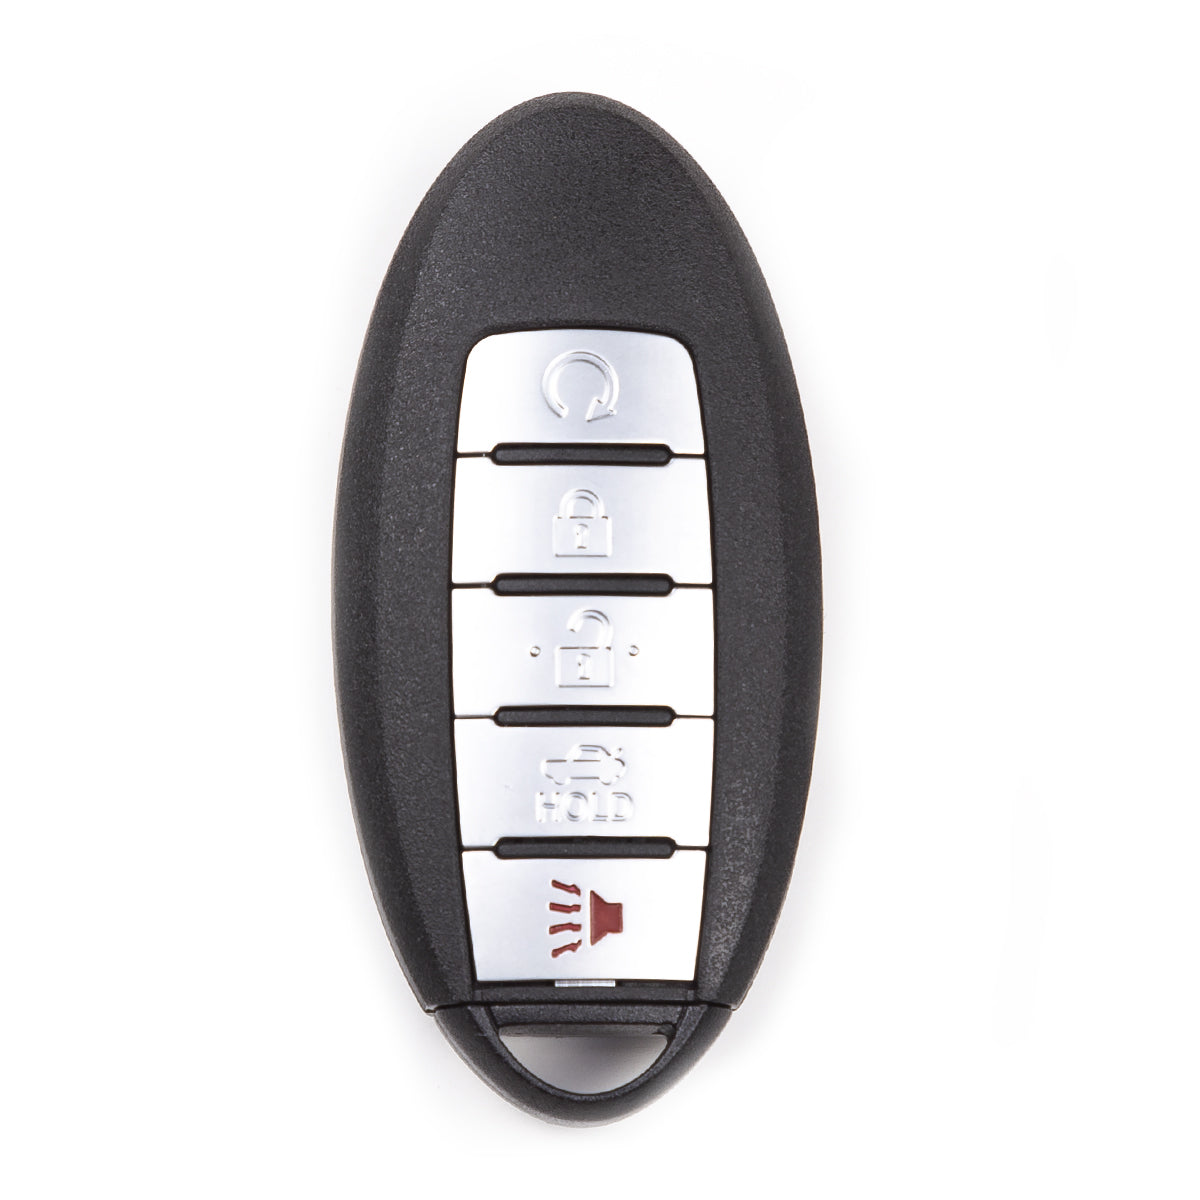 2015 Nissan Altima Smart Key w/ Remote Start 5 Buttons Fob FCC# R5S180144014 - Aftermarket